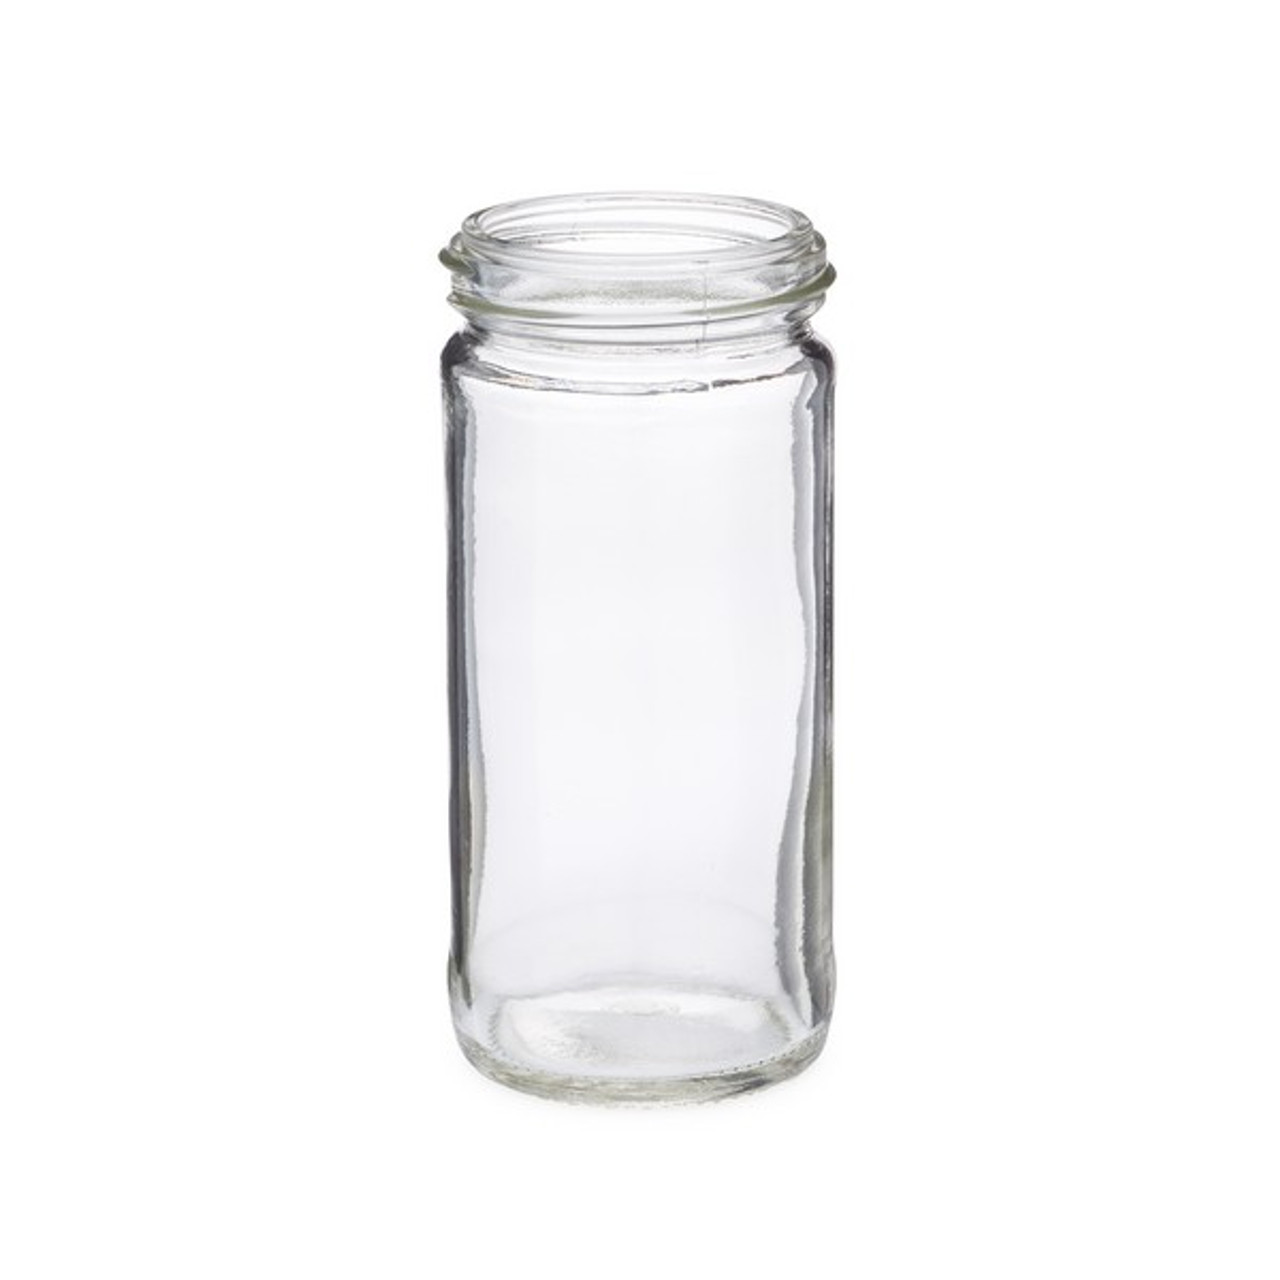 4 oz Clear Glass Spice Jar (White PP Cap)